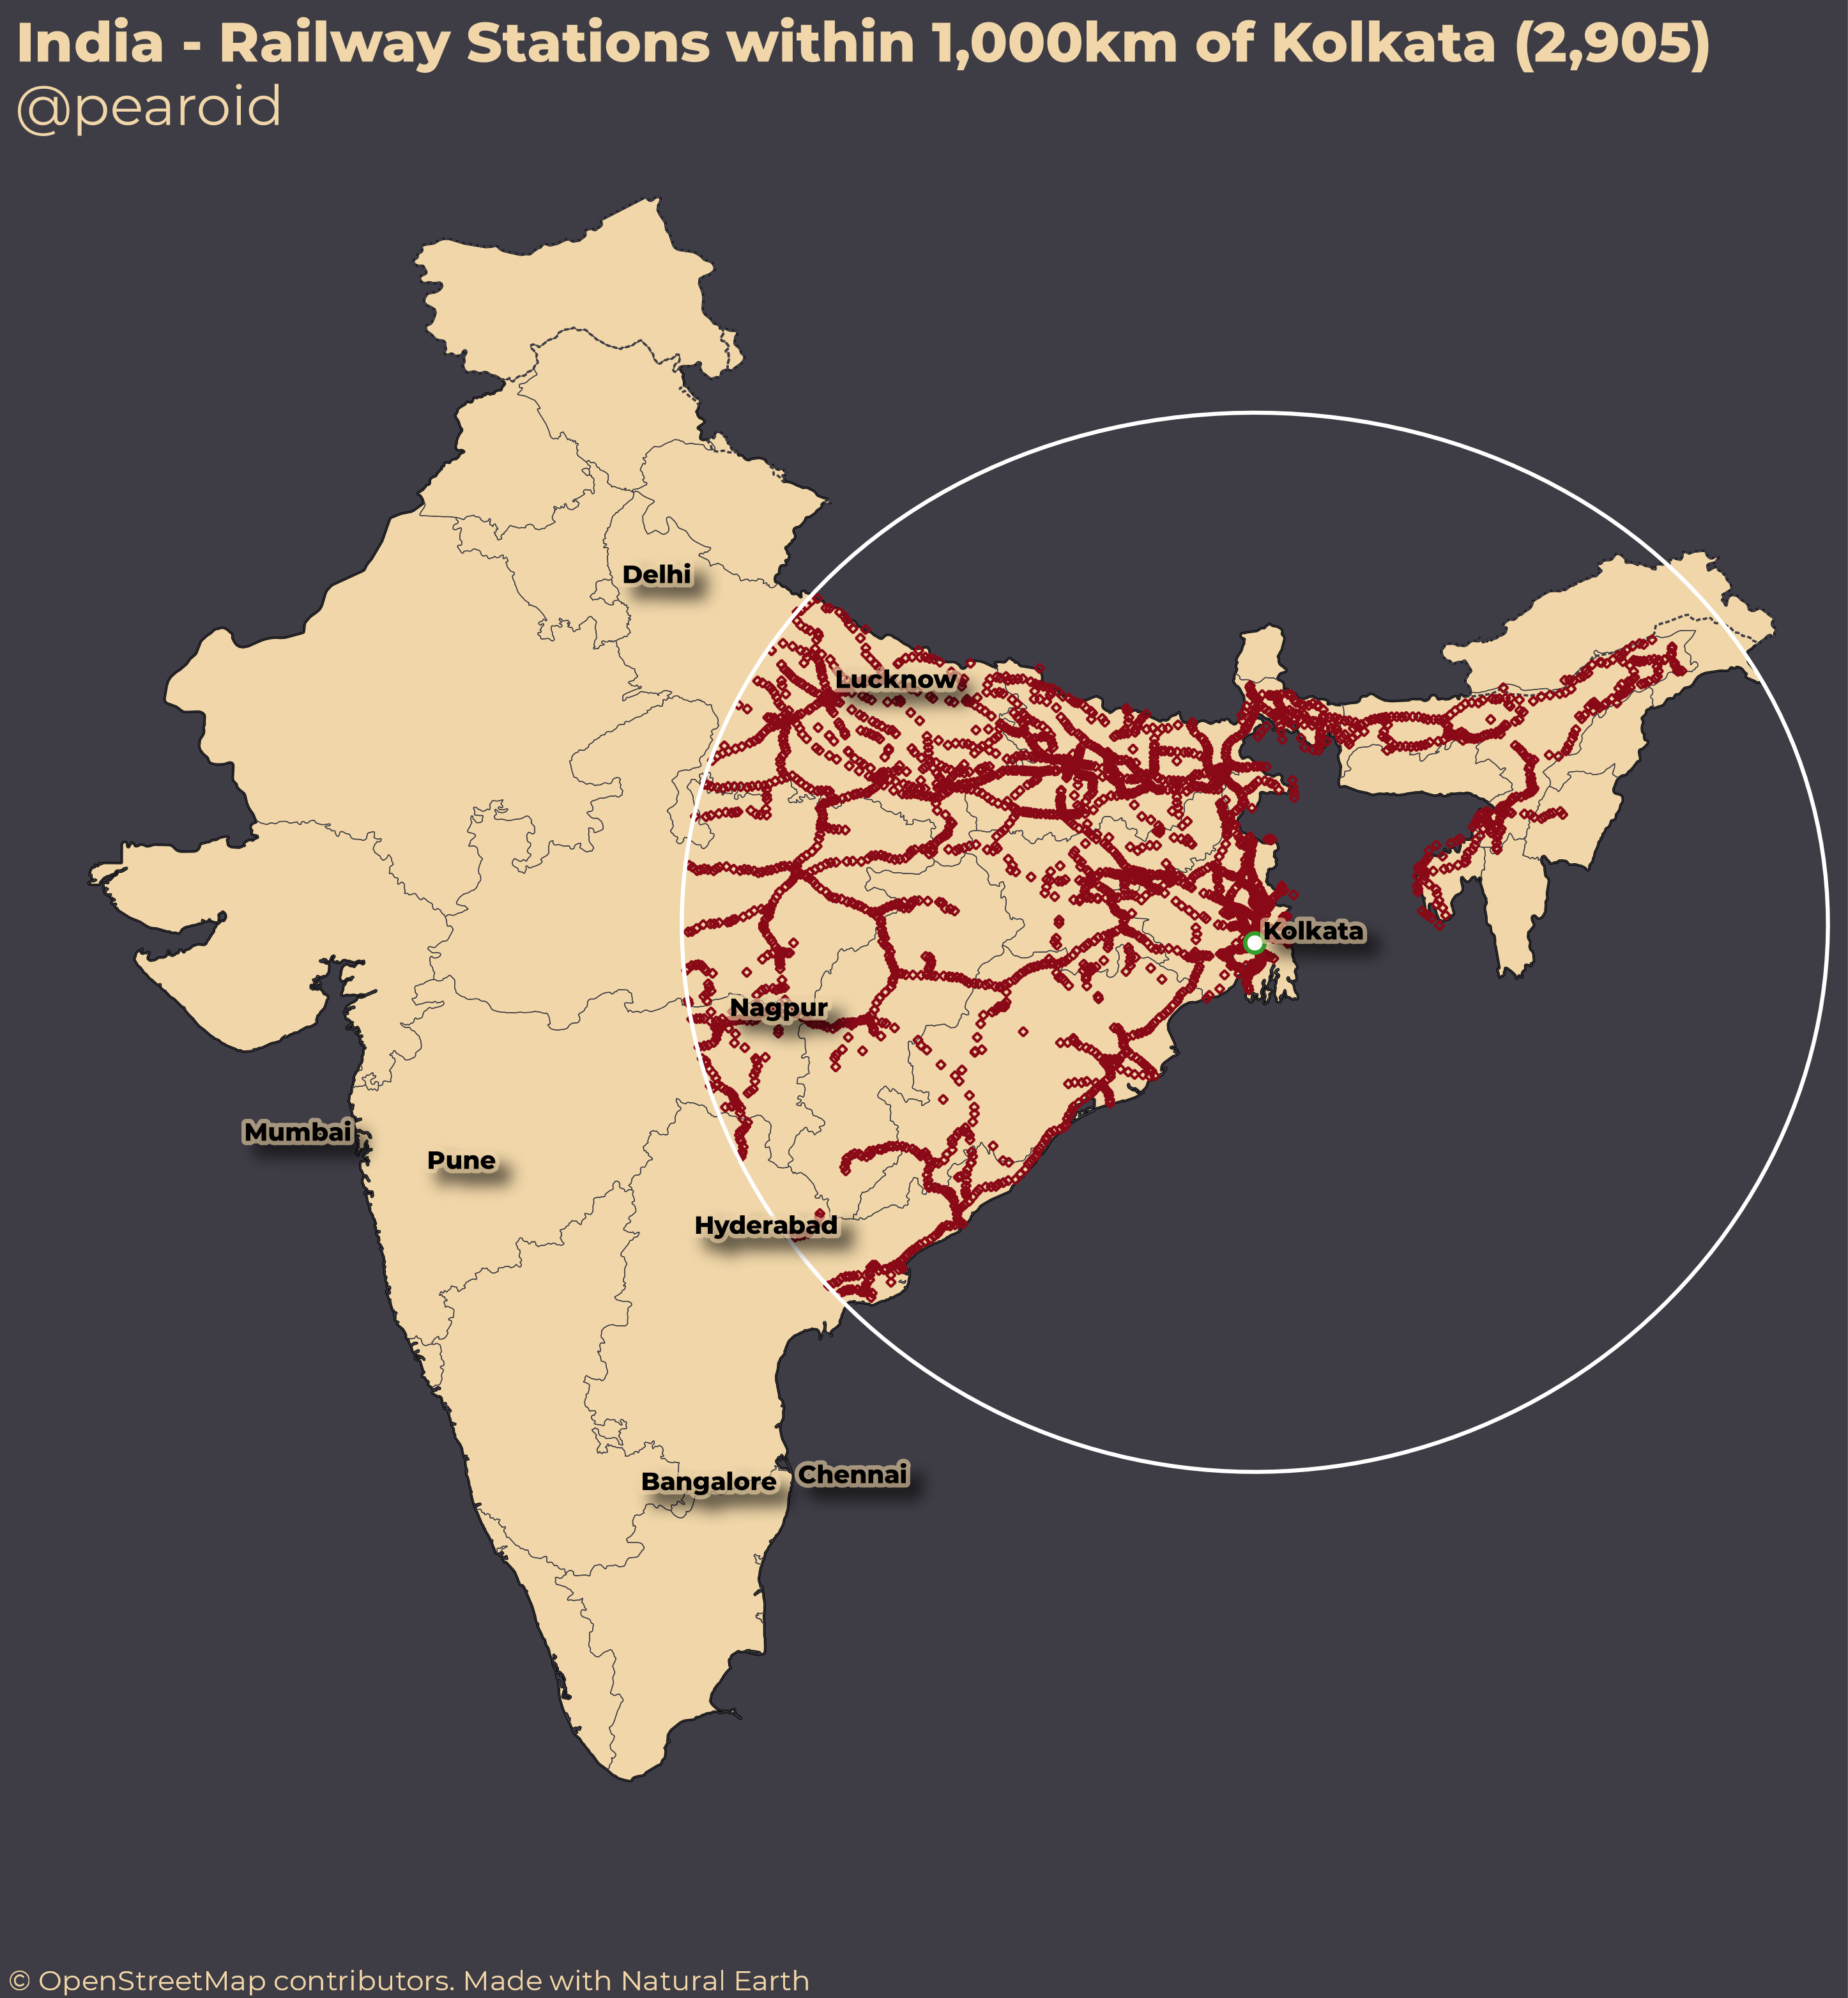 Every Railway Station within 1,000km of Kolkata